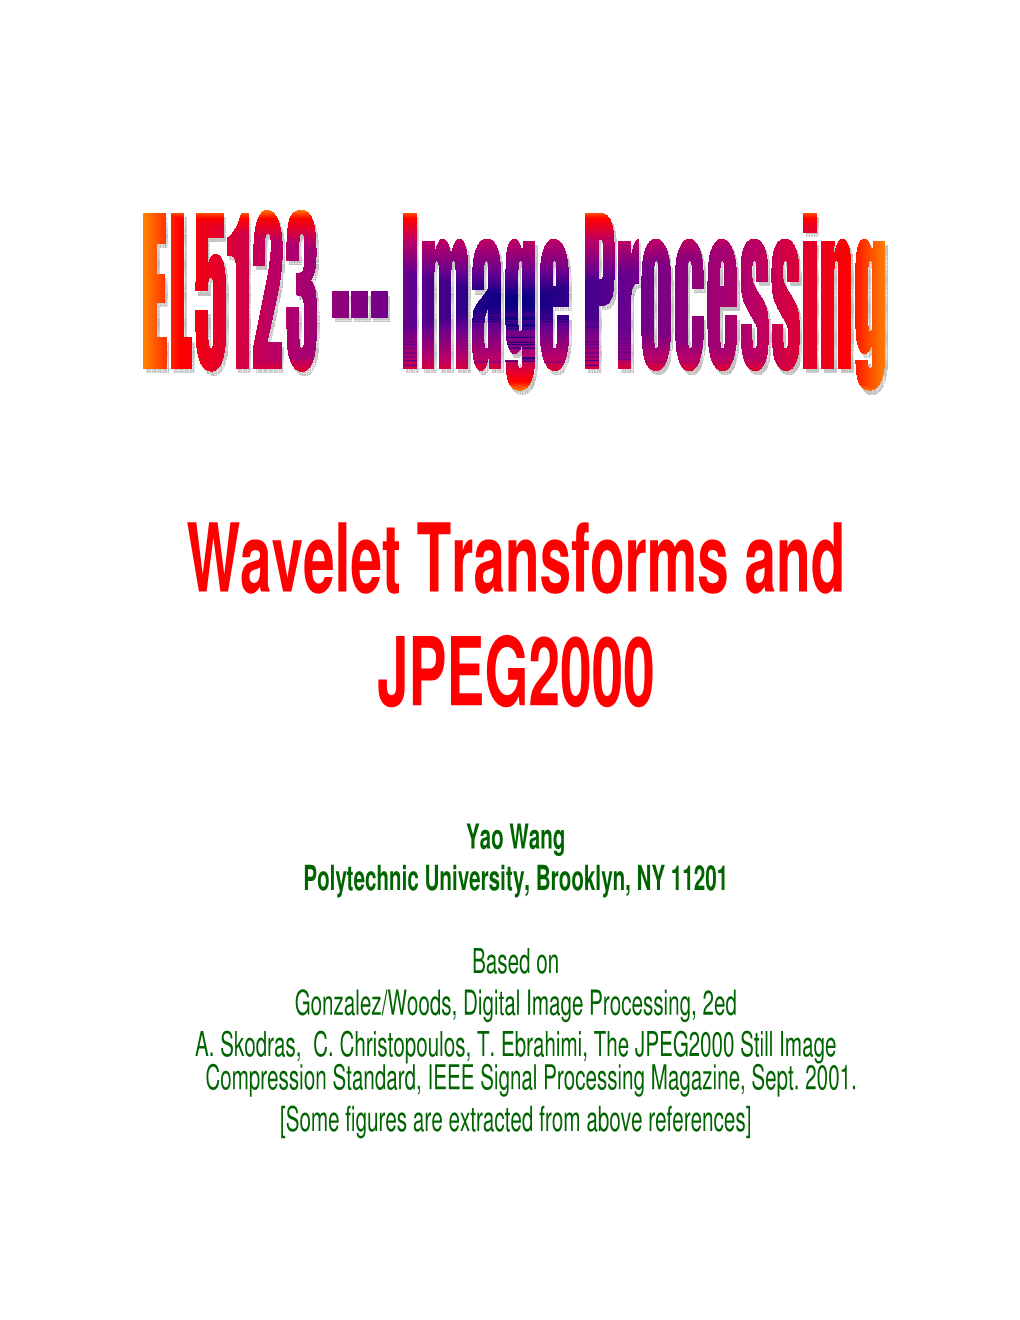 Wavelet Transforms and JPEG2000